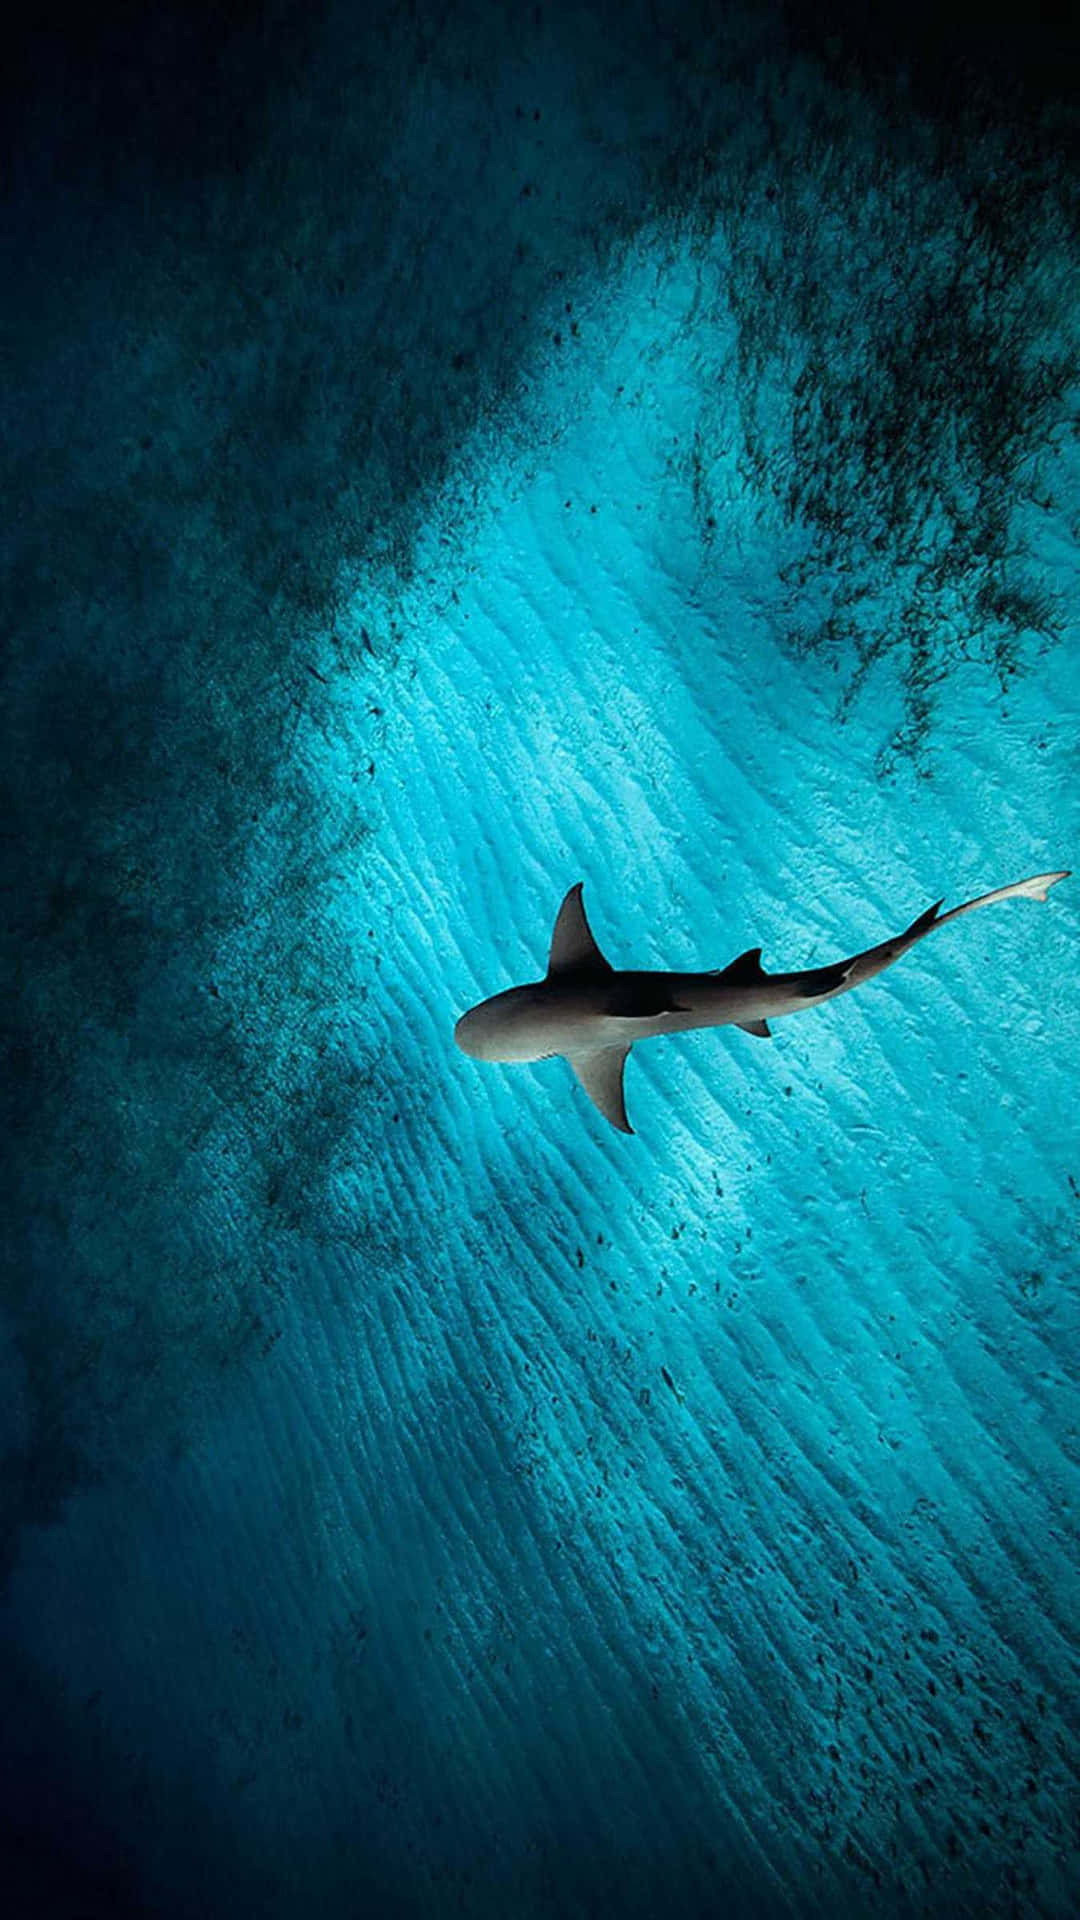 Wallpaper ID 440546  Animal Shark Phone Wallpaper Underwater Fish  Sunbeam 750x1334 free download